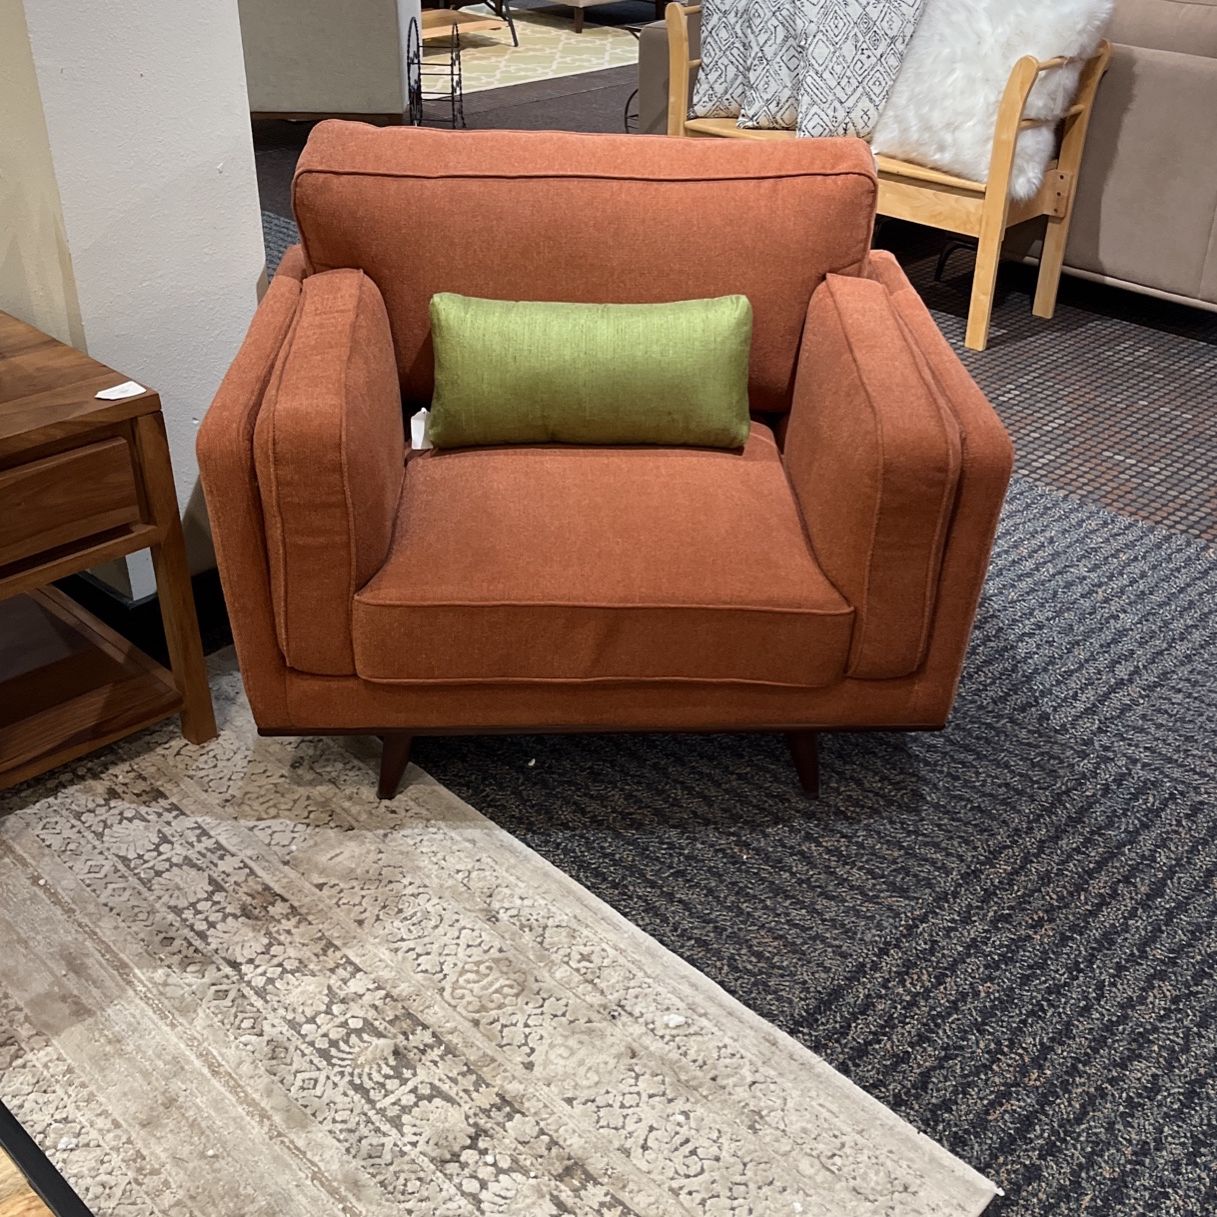 Orange Upholstered Accent Chair 44" L x 39" D x 34" H